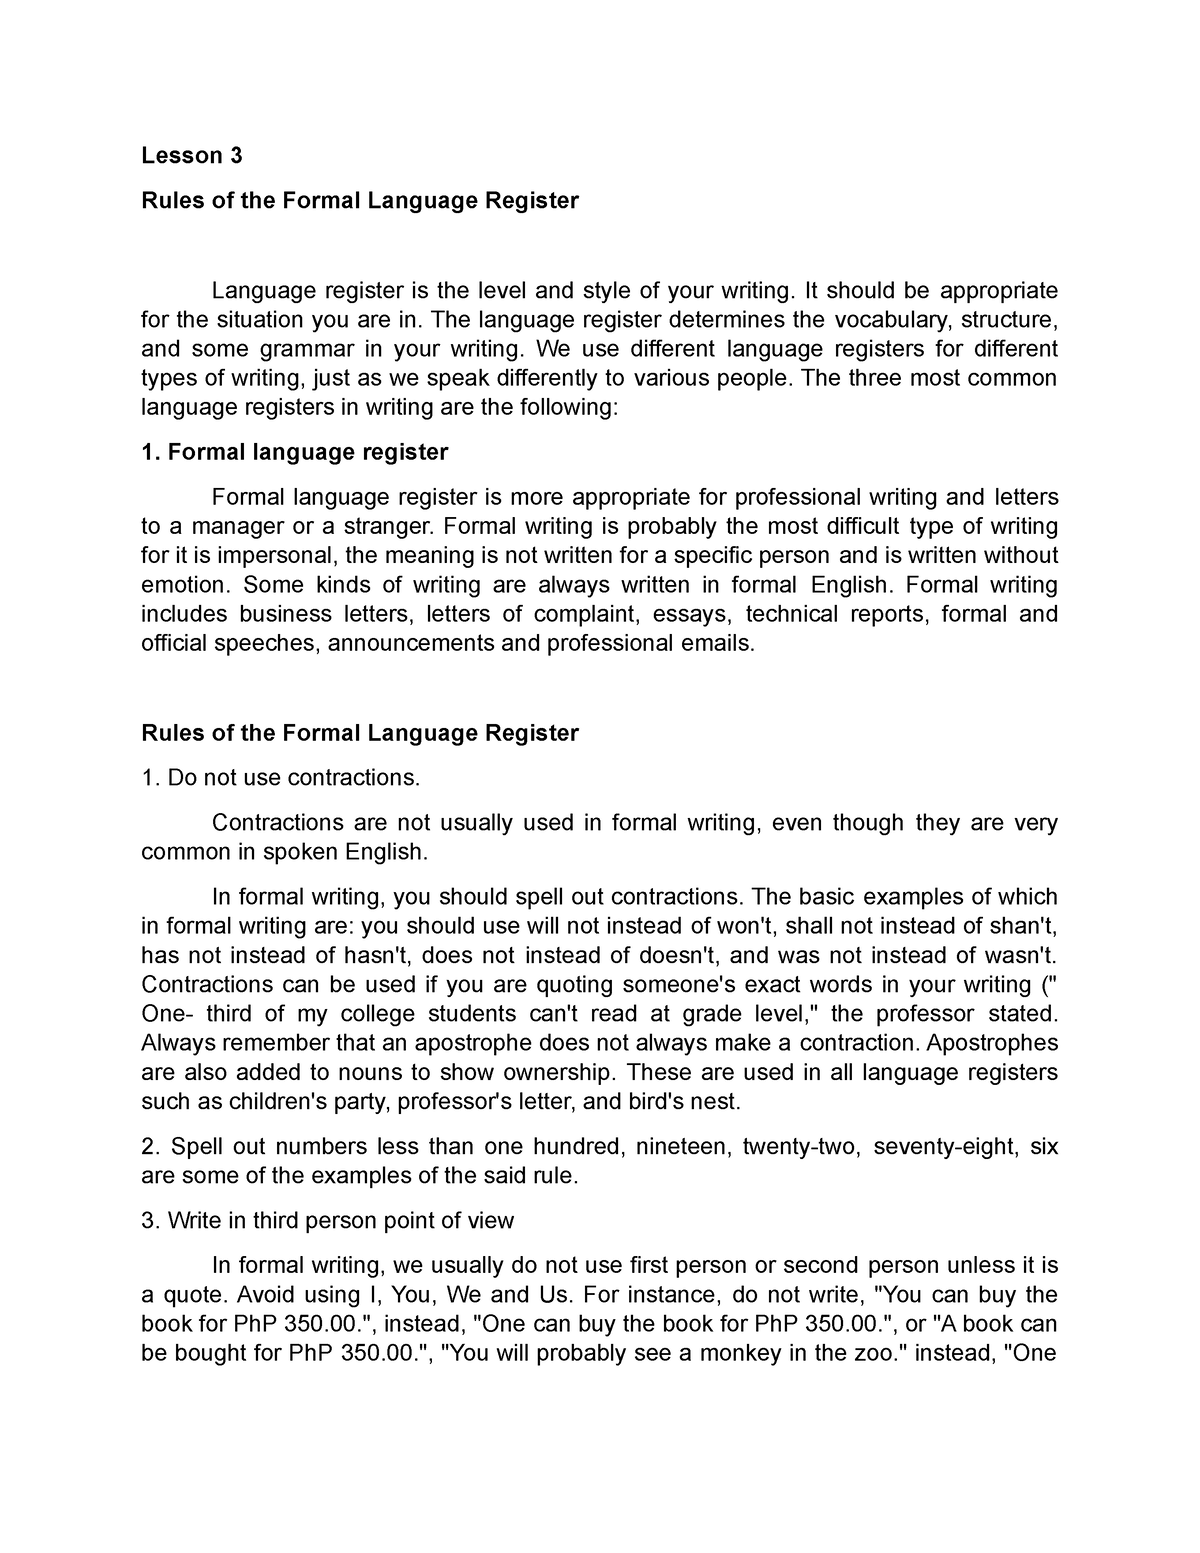 essay about language register